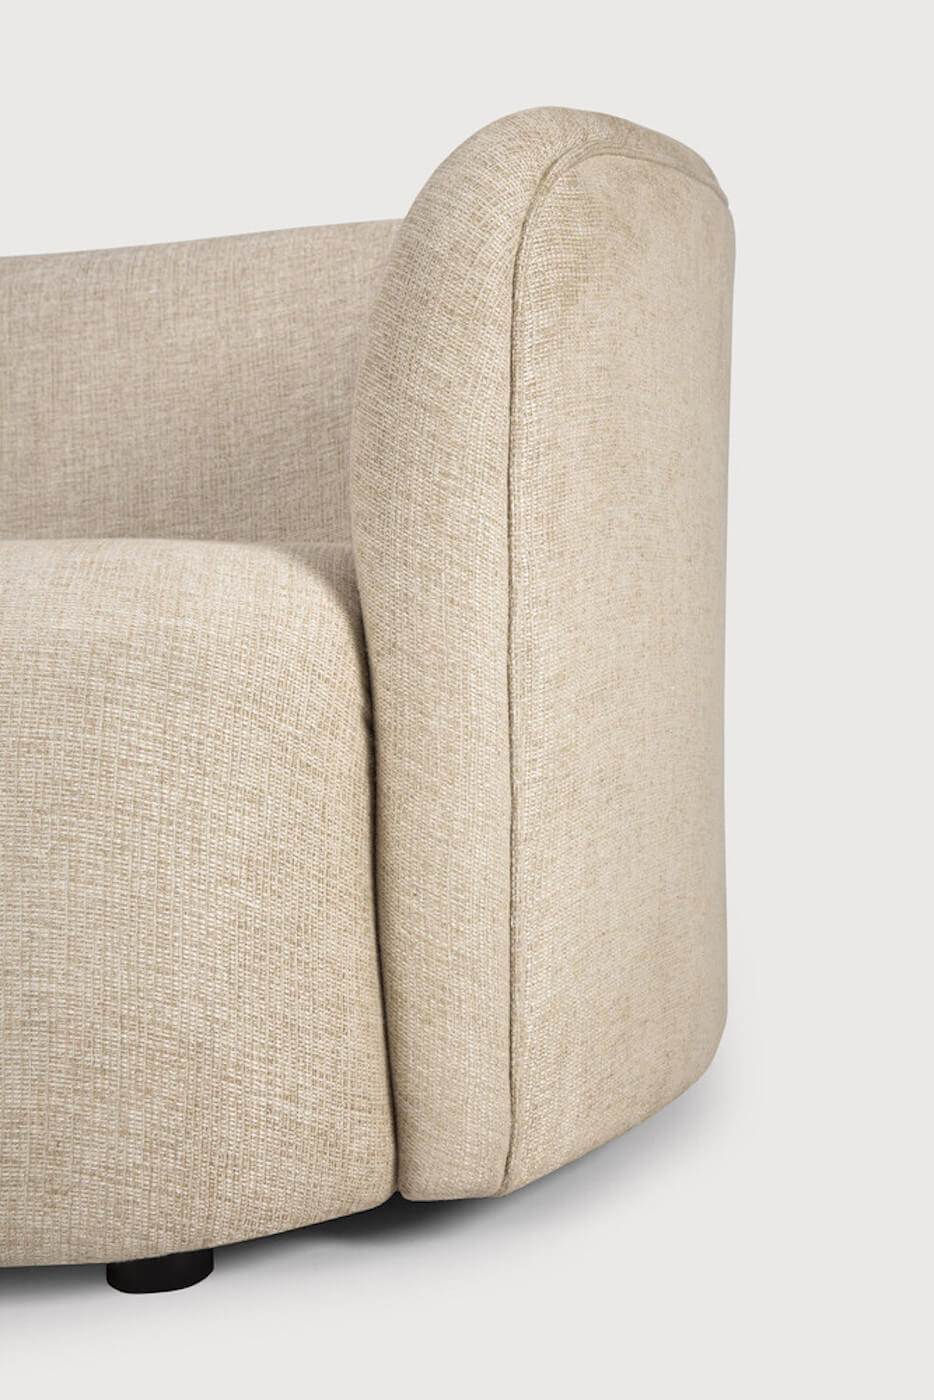 sofa luxe en tissu beige, canapé Ellipse